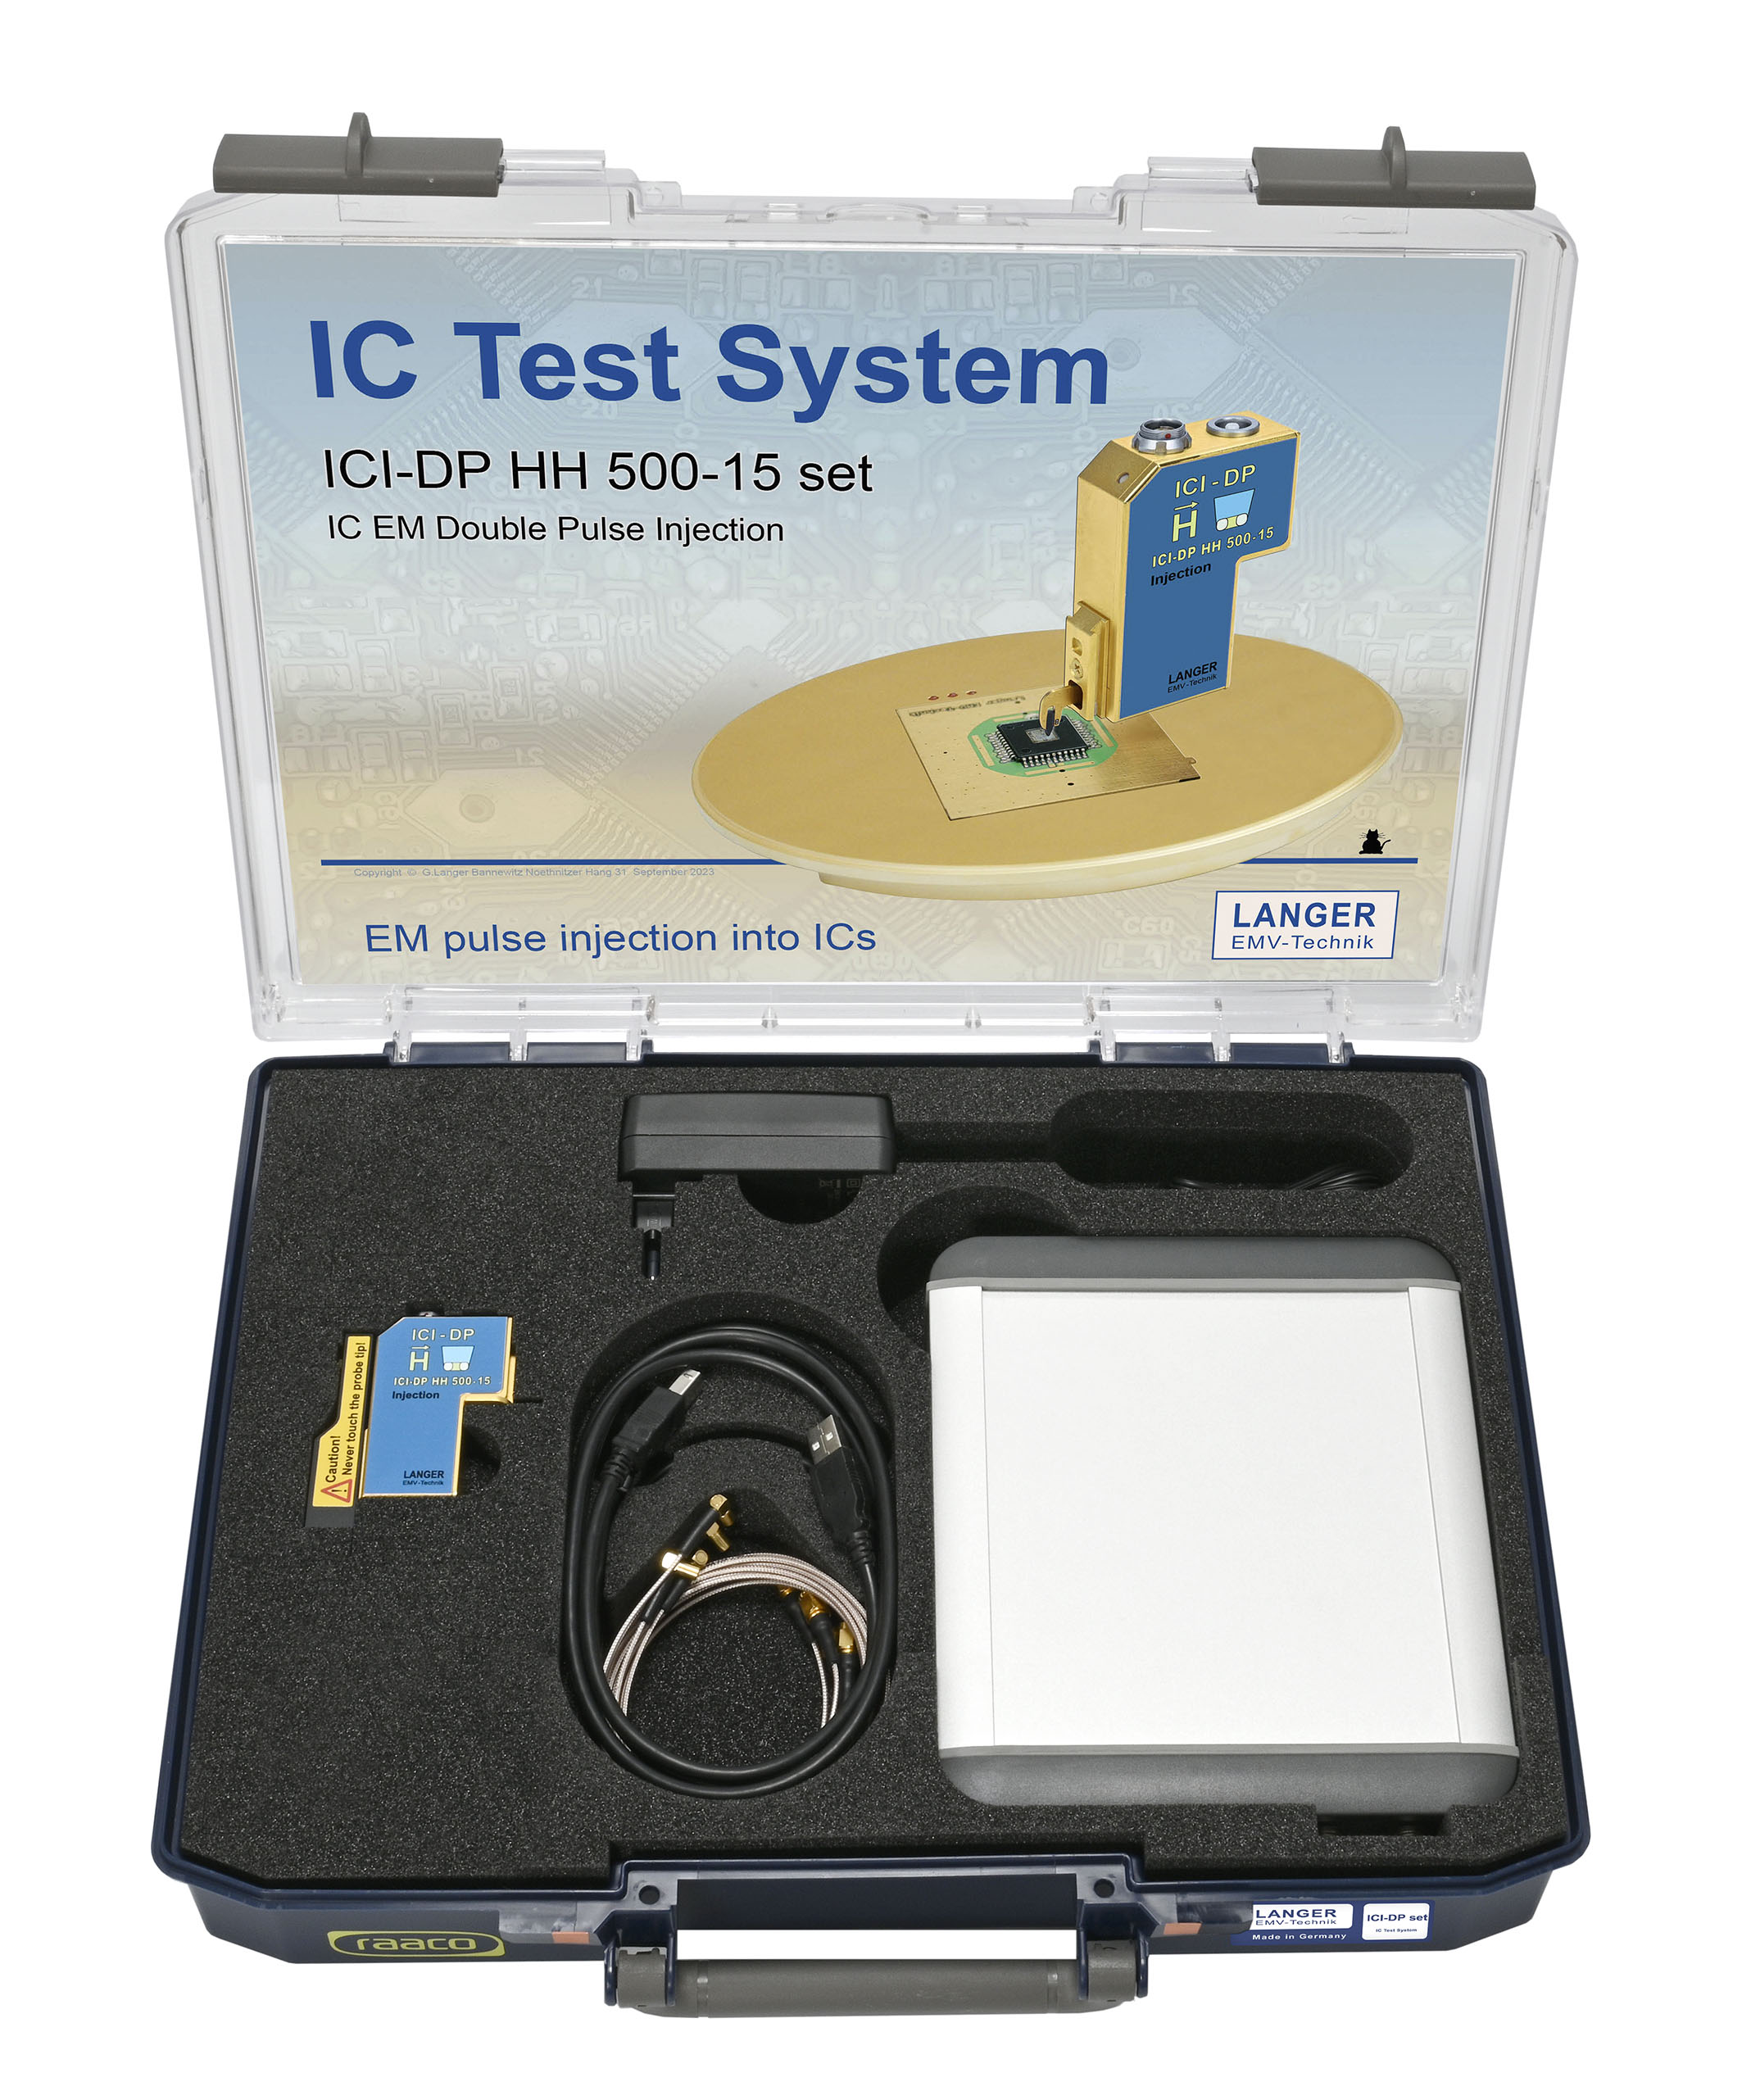 Contents of the case ICI-DP HH500-15 set